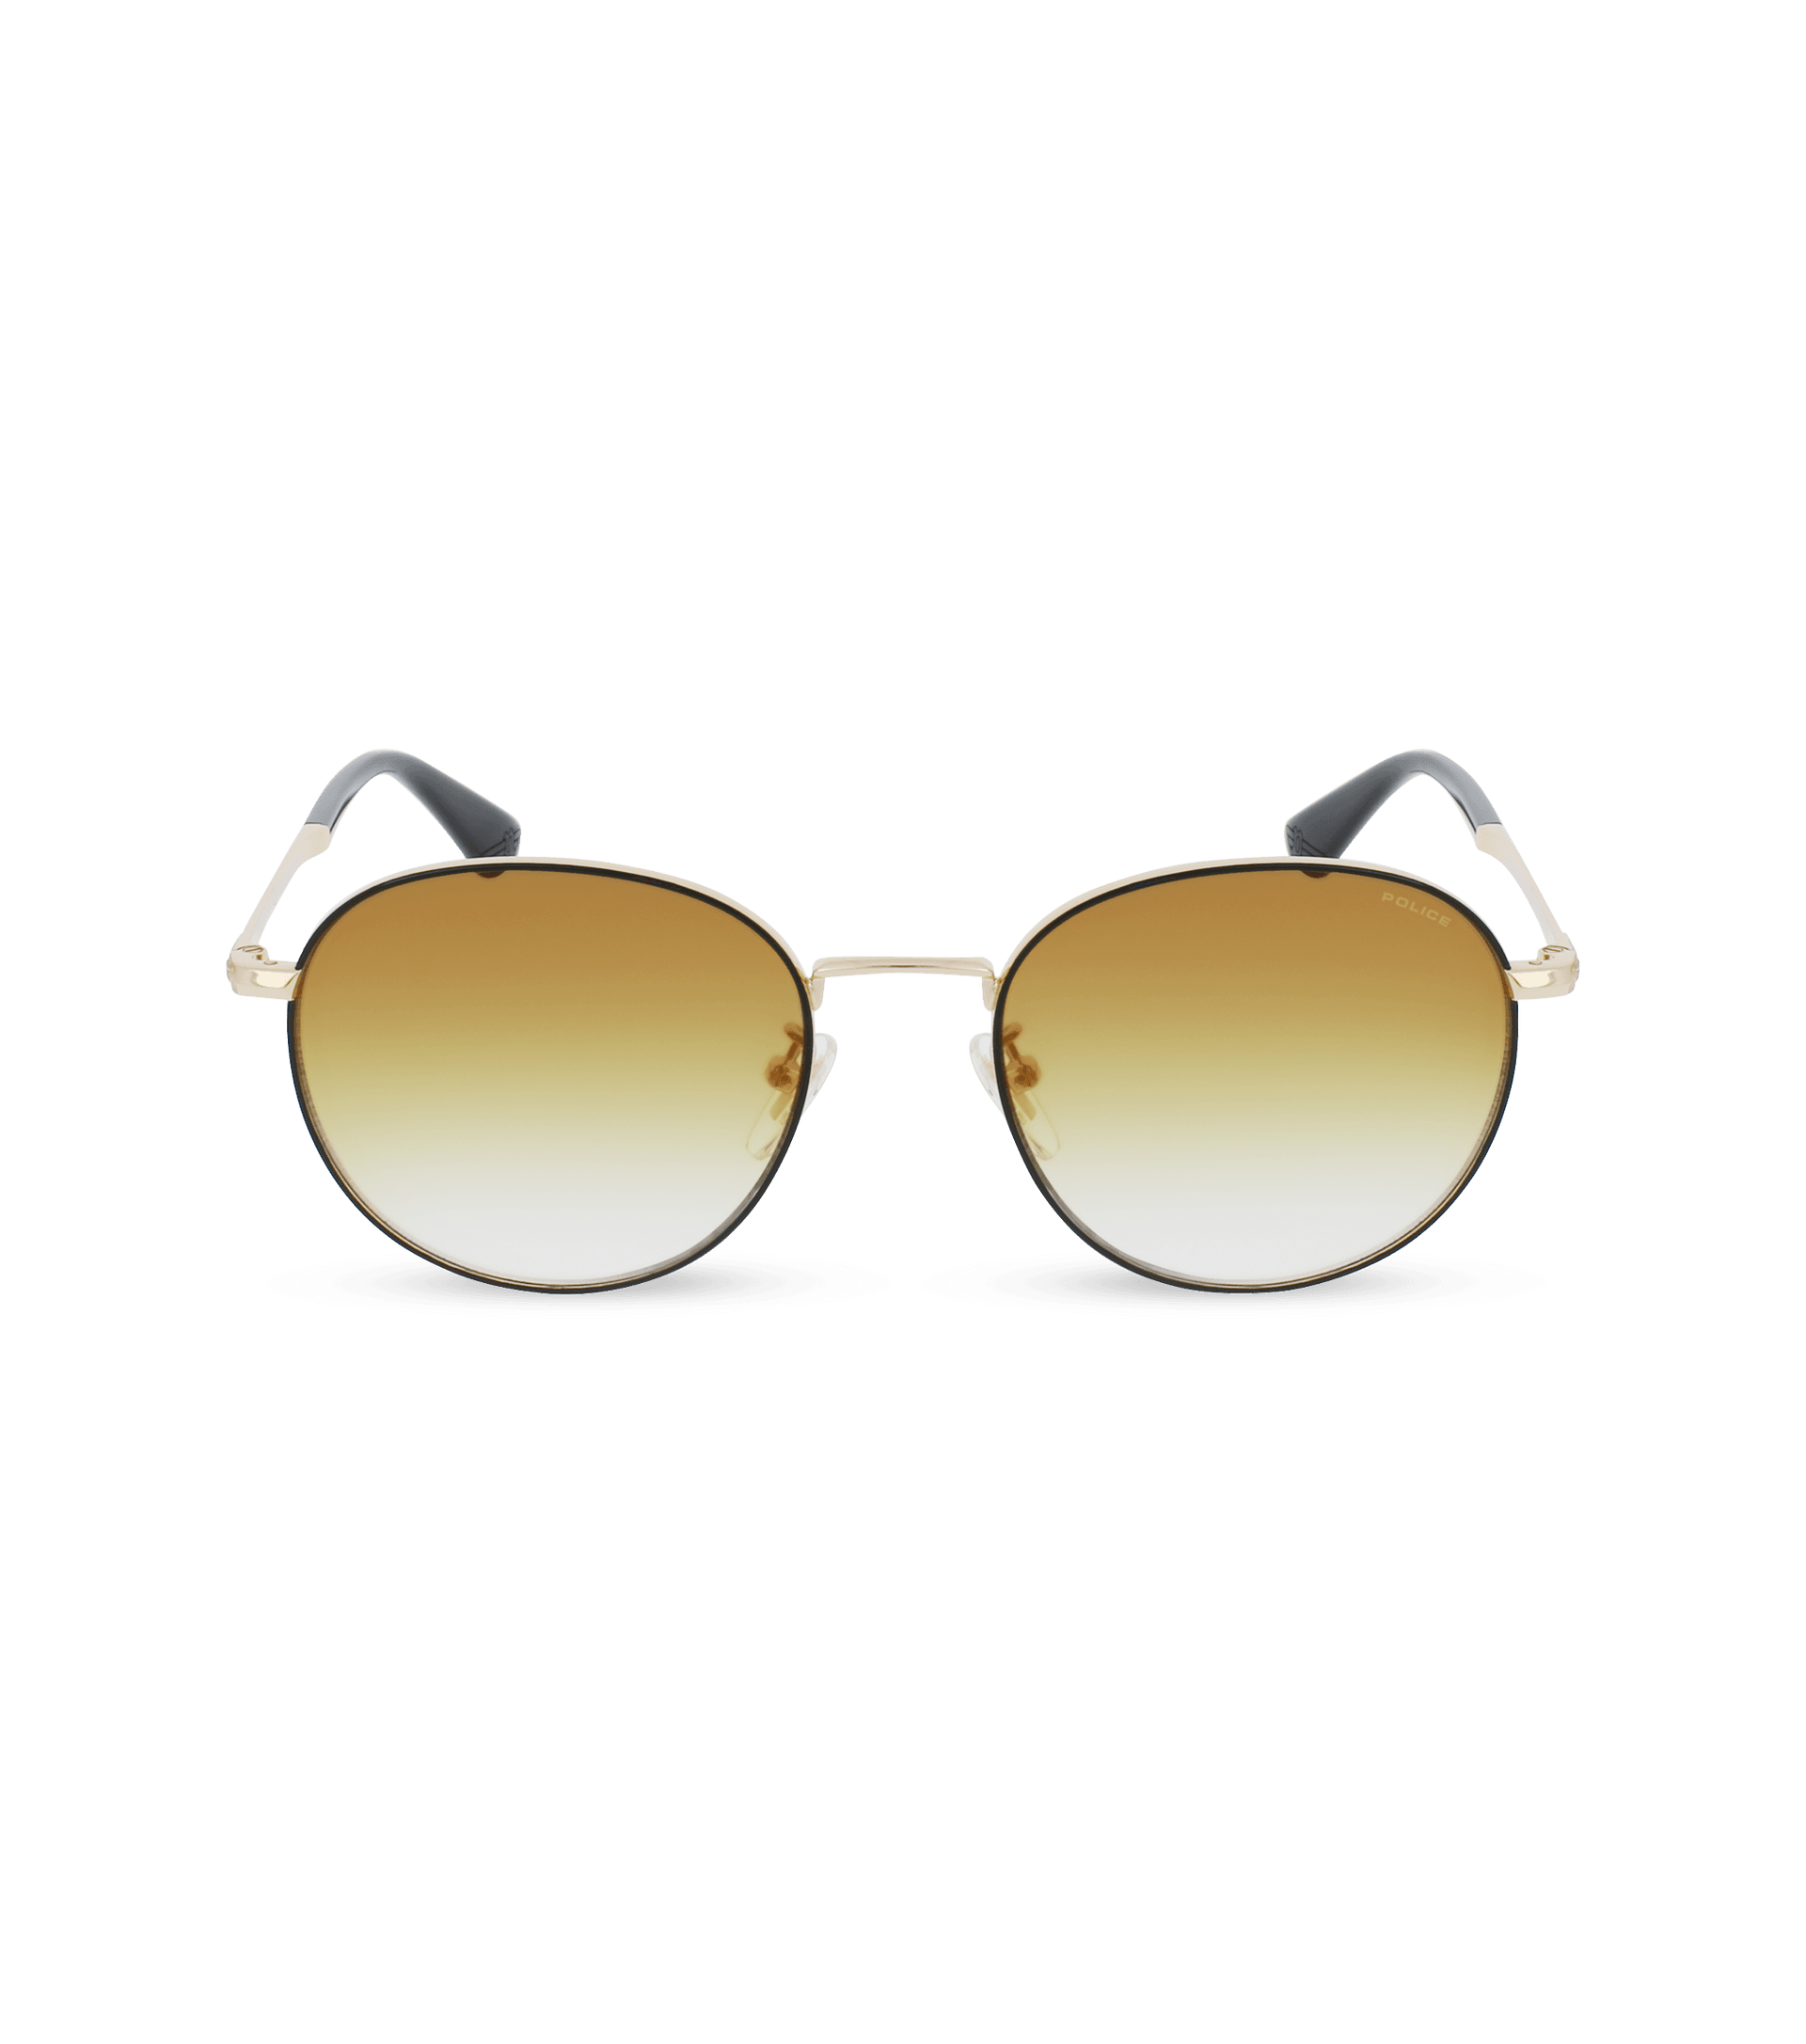 Police sunglasses - Roadie 3 Man Sunglasses Police SPLE25 Gold